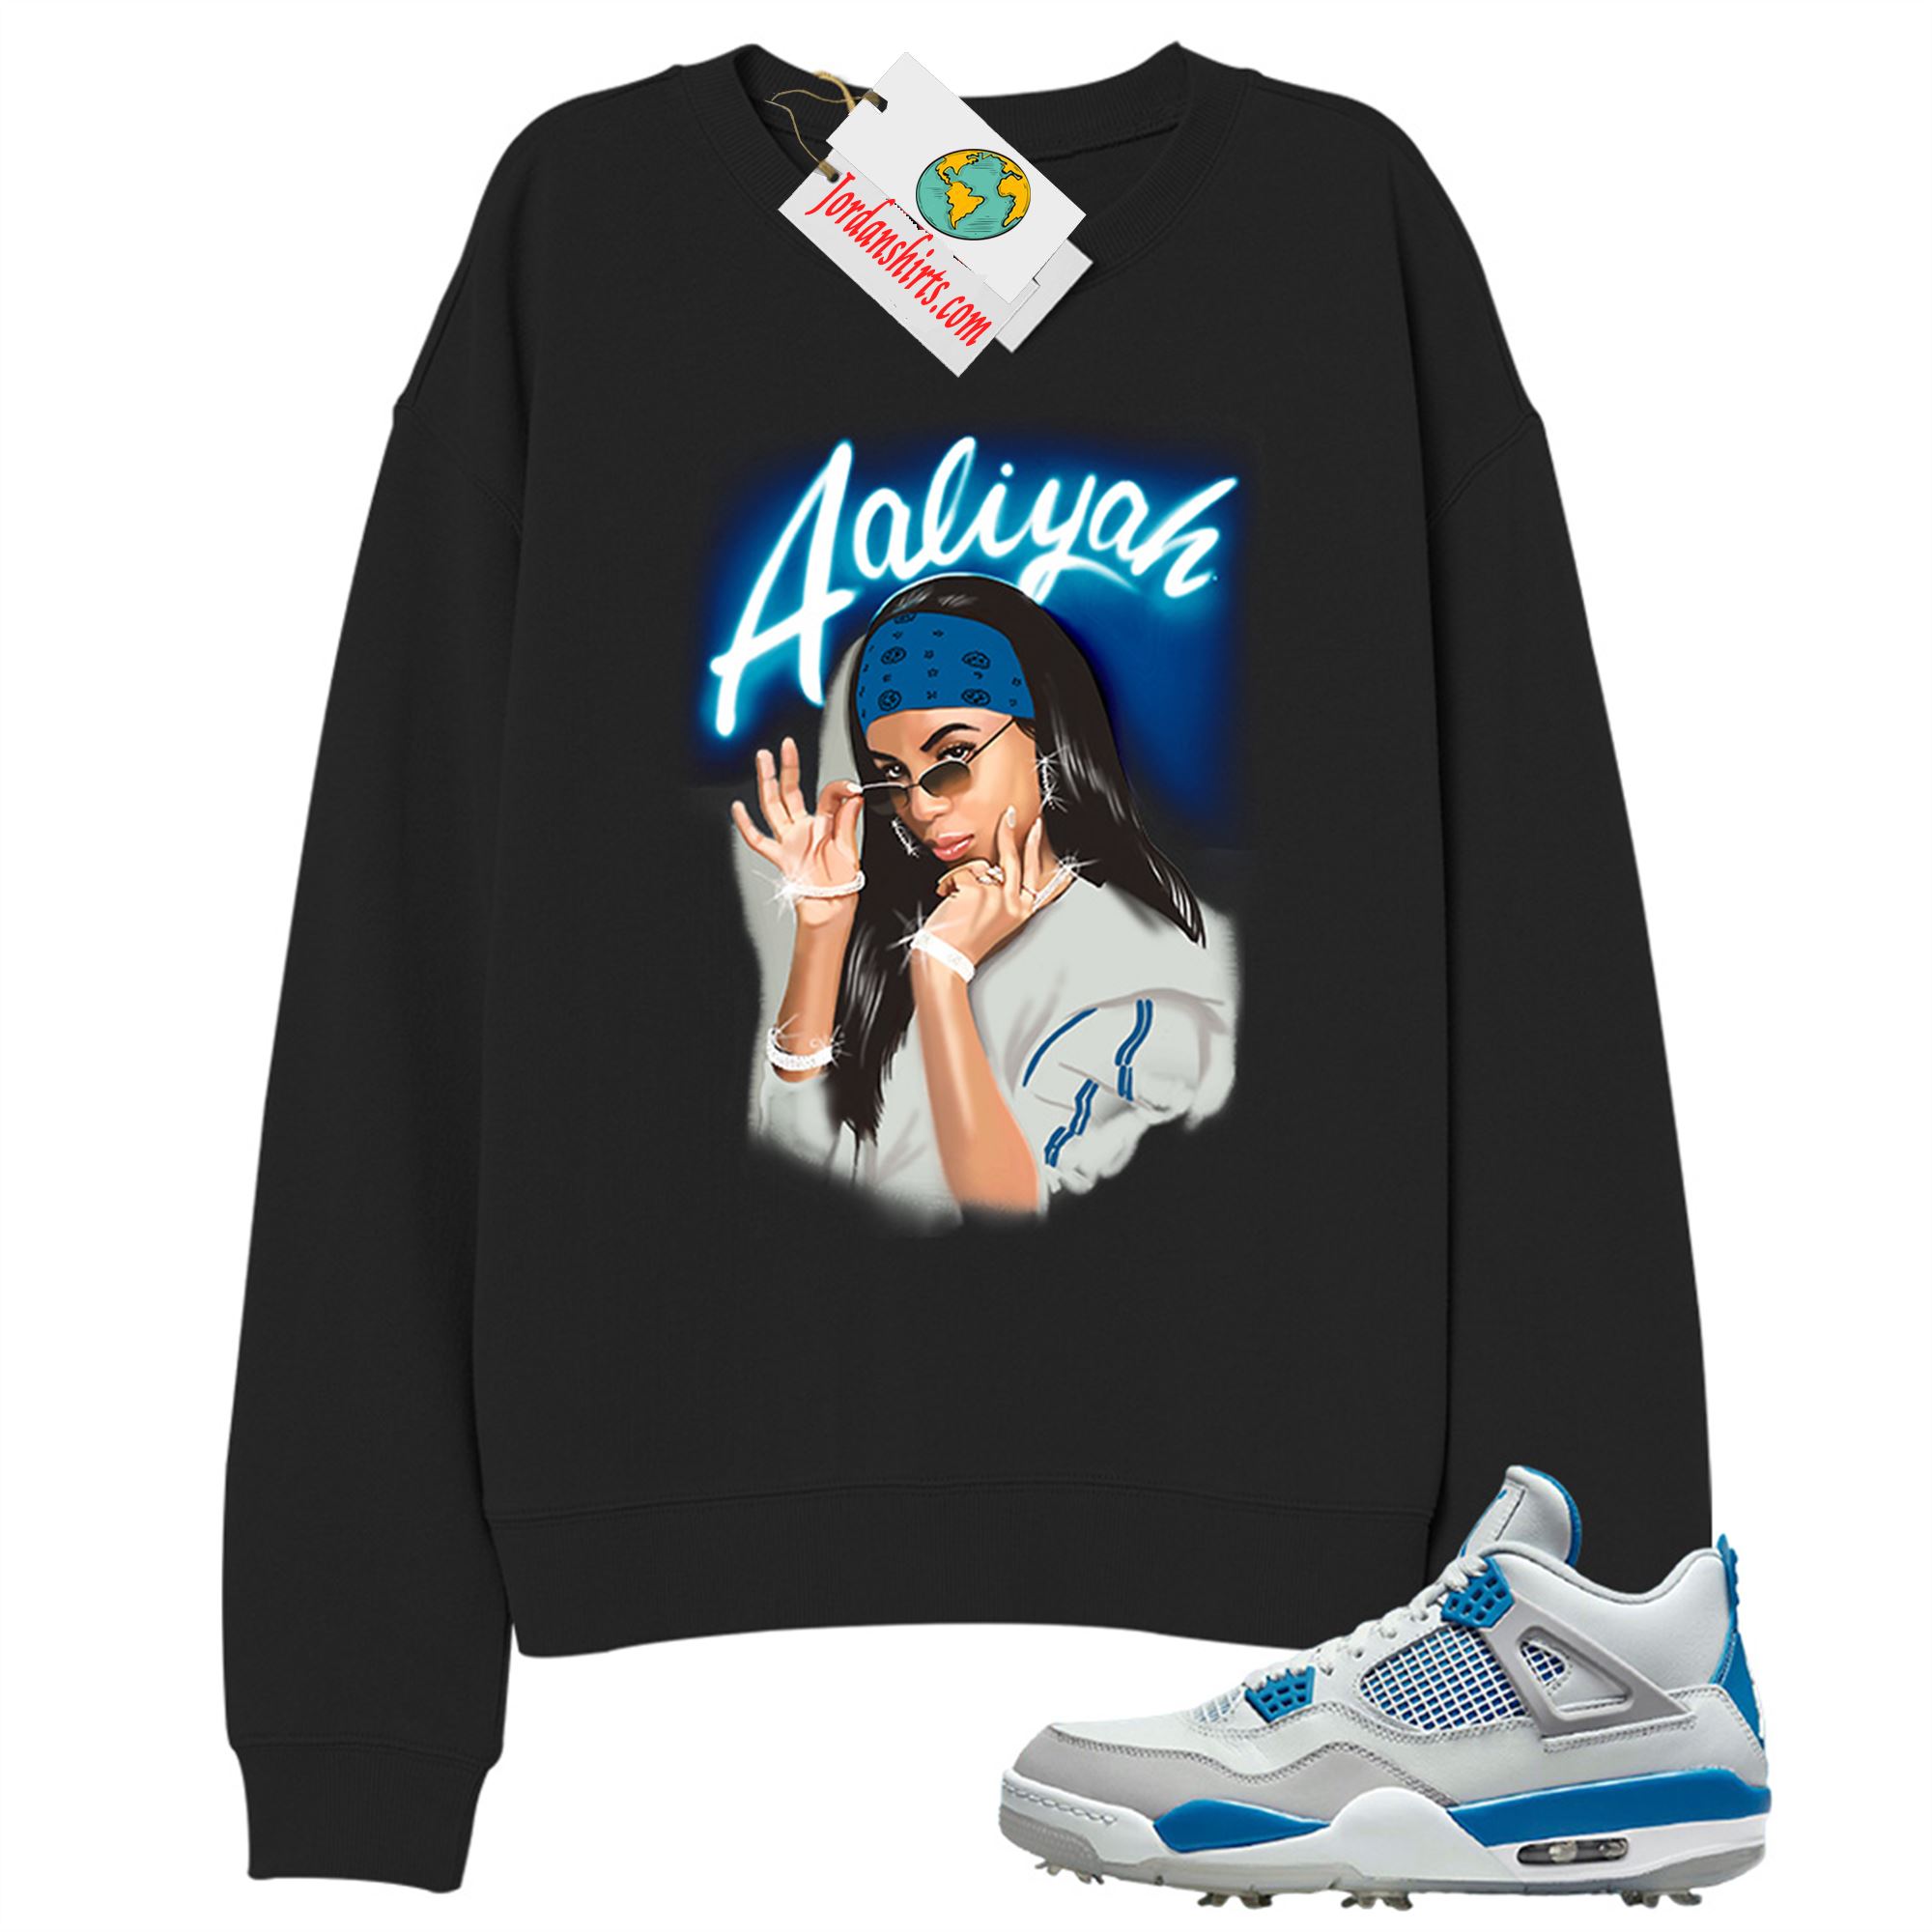 Jordan 4 Sweatshirt, Aaliyah Airbrush Black Sweatshirt Air Jordan 4 Golf Military Blue 4s Full Size Up To 5xl